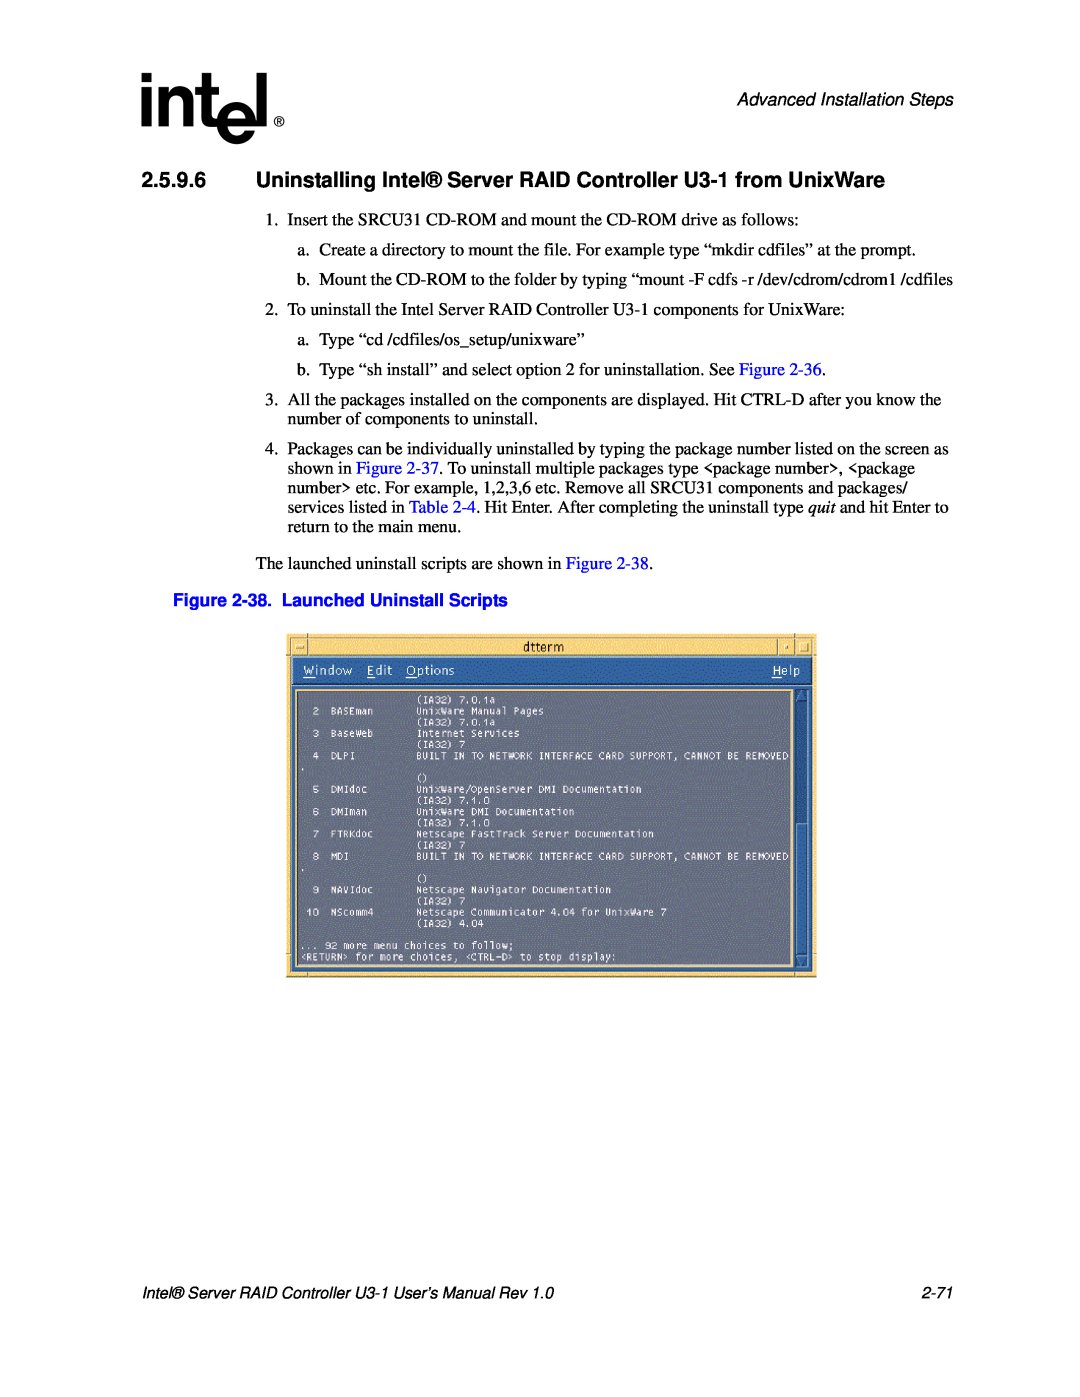 Intel SRCU31 user manual Advanced Installation Steps, 38.Launched Uninstall Scripts 